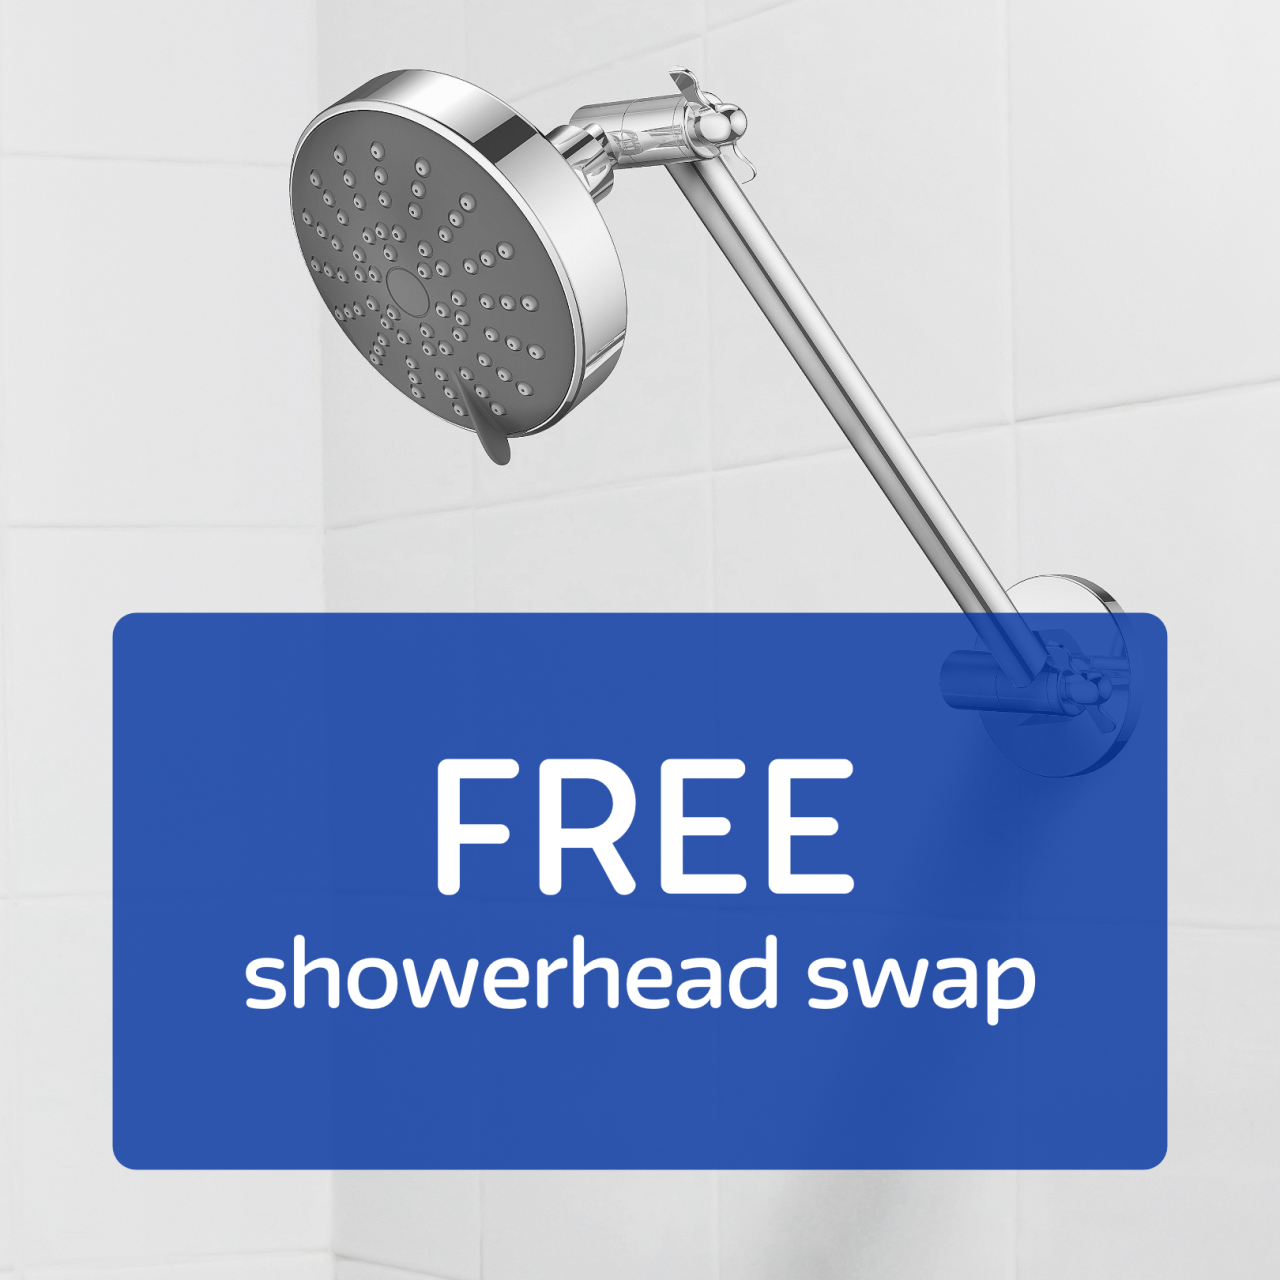 Free shower-head program comes to Port Hedland